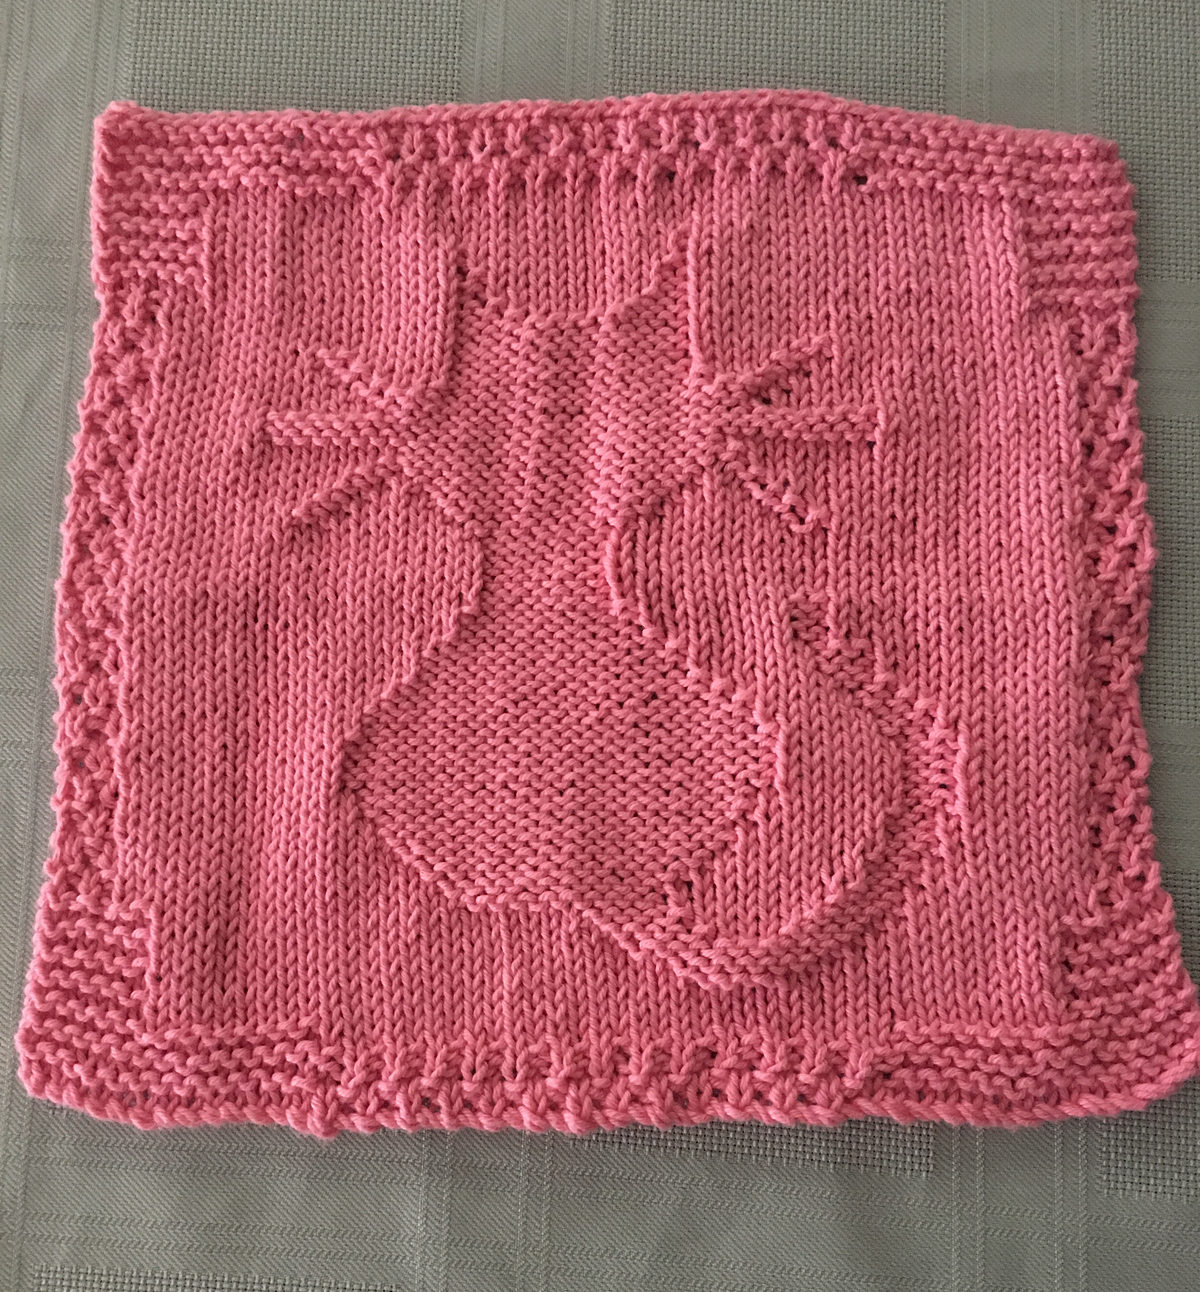 Heart Shaped Dishcloth Knitting Pattern Animal Dishcloth And Washcloth Knitting Patterns In The Loop Knitting